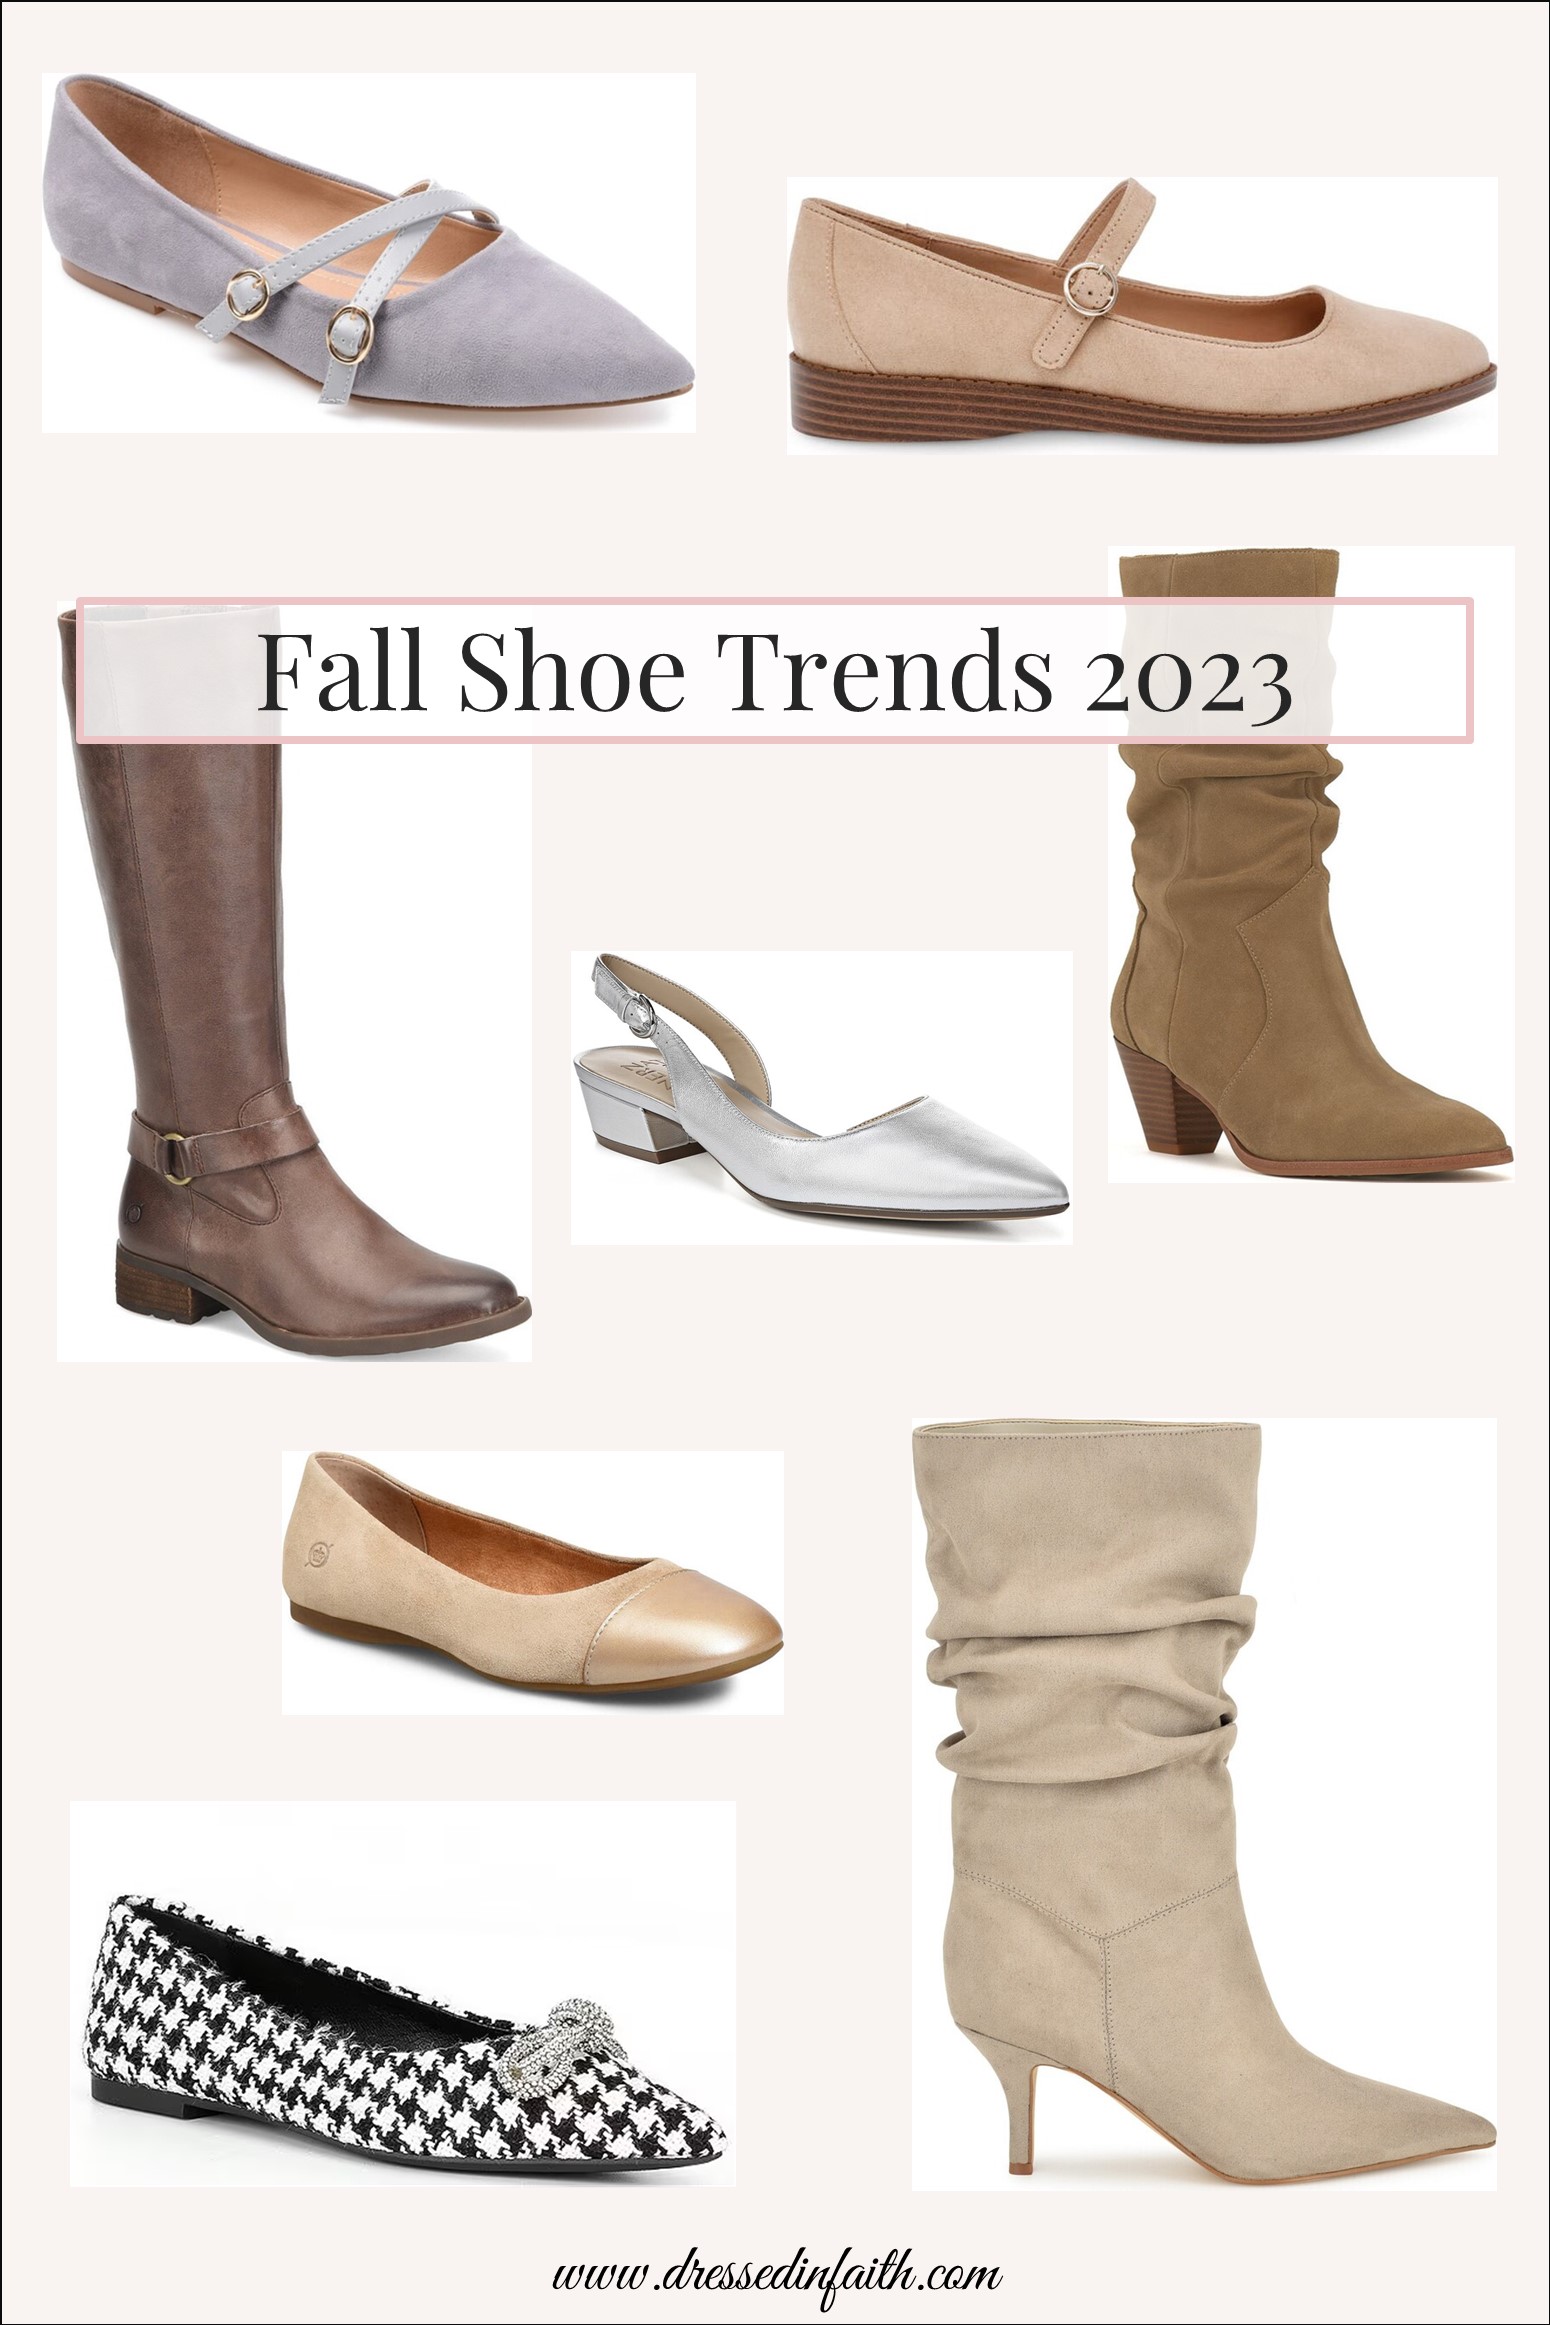 Fall Shoe Trends 2023